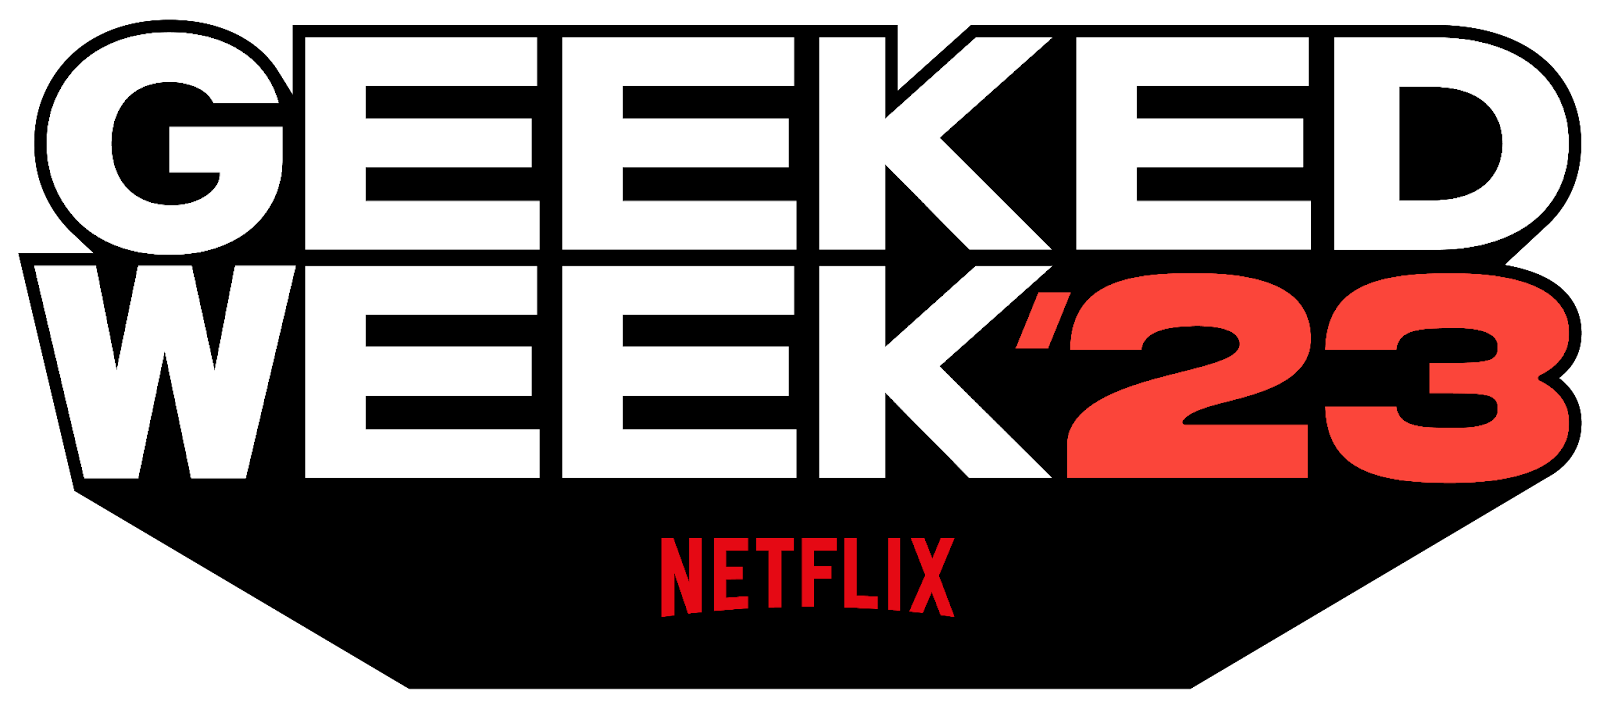 Netflix Sneak Peeks New Genre Series Including 'Cyberpunk,' 'Entergalactic